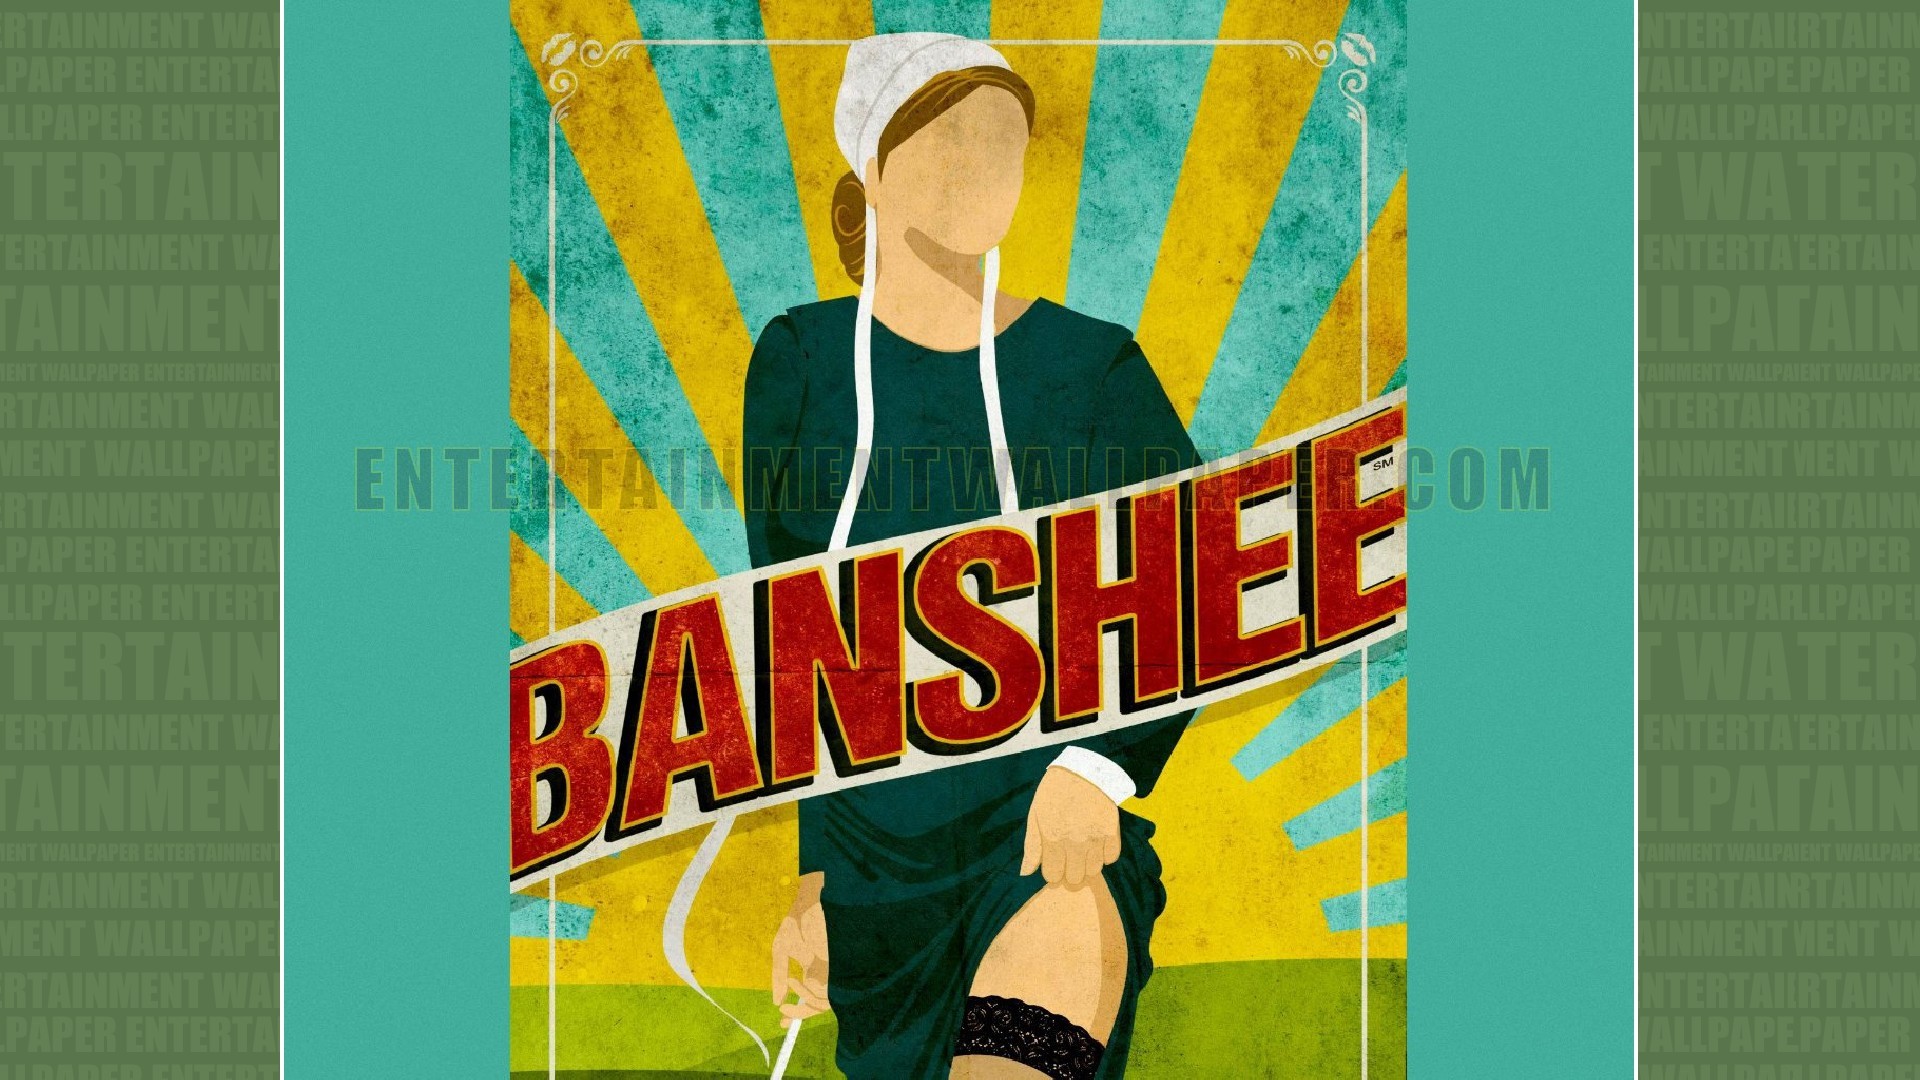 1920x1080 Banshee Wallpaper - Original size, download now.